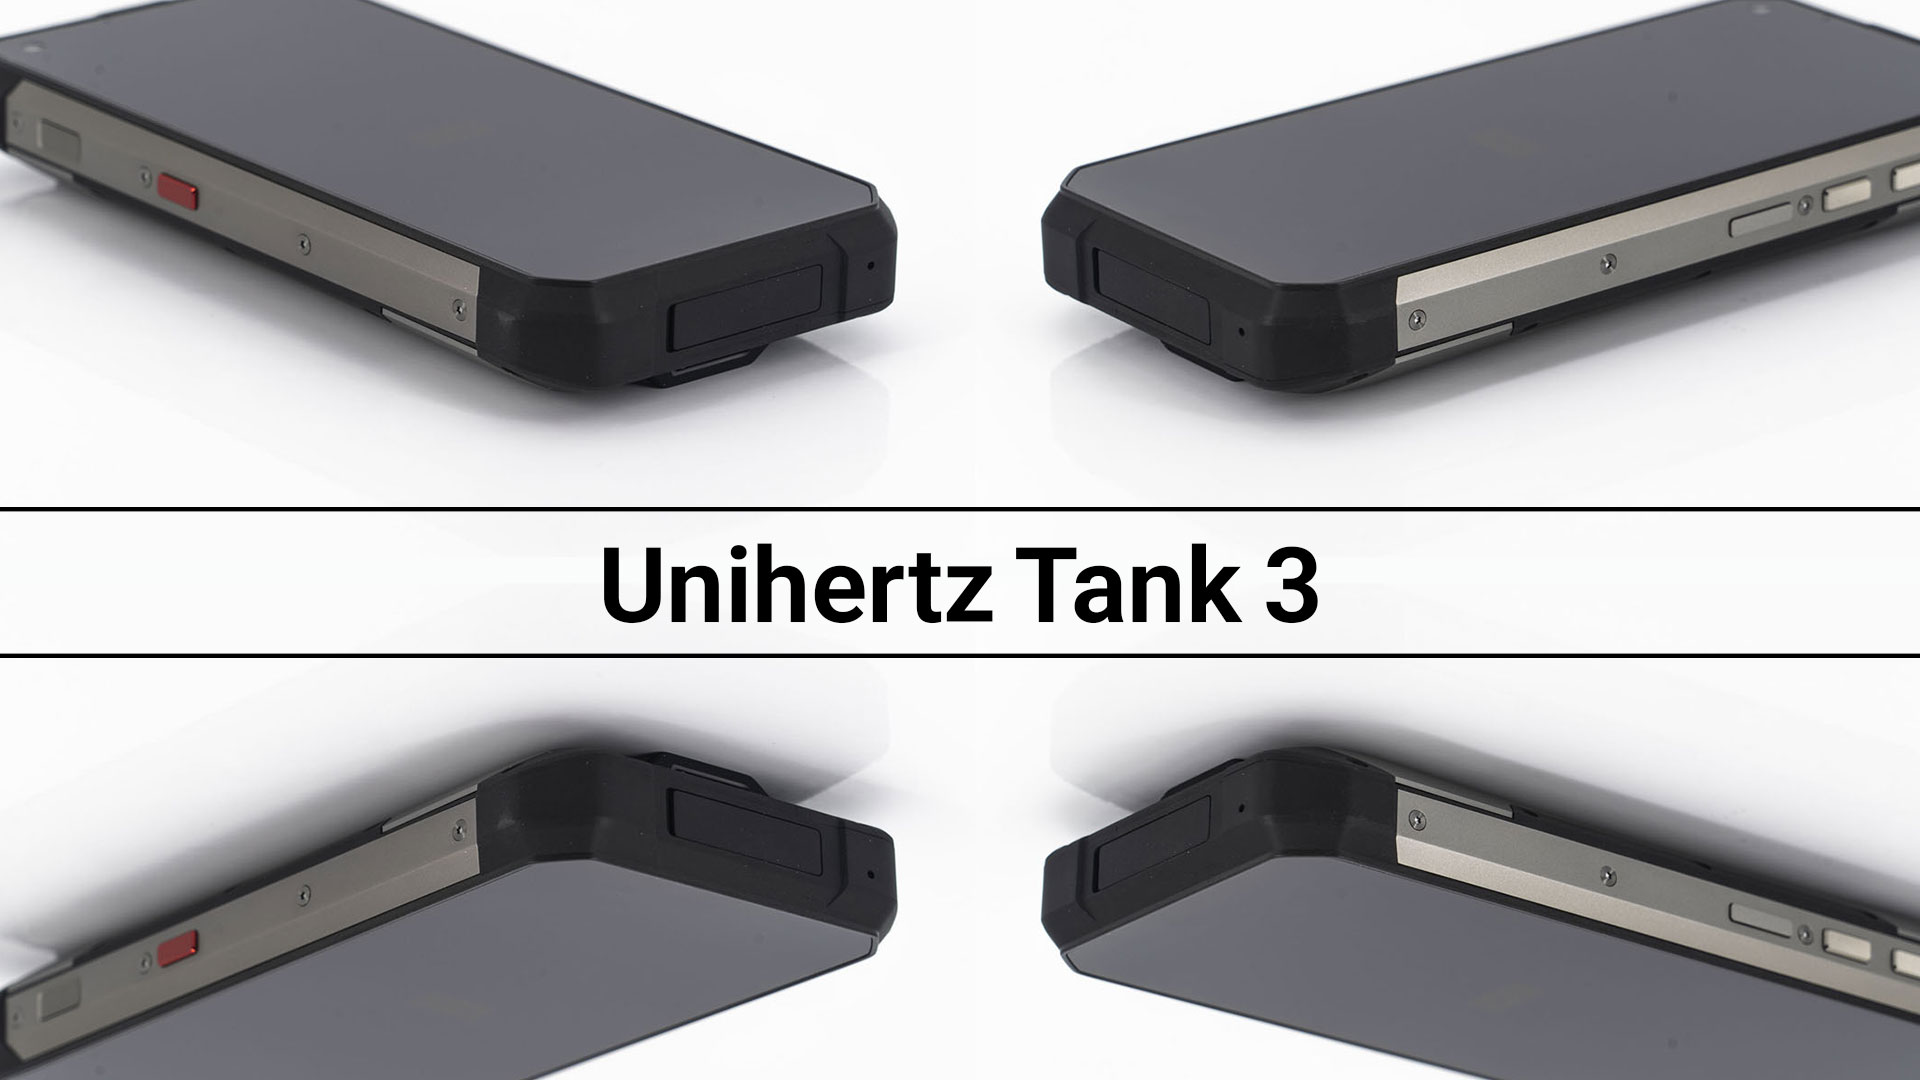 Unihertz Tank 3